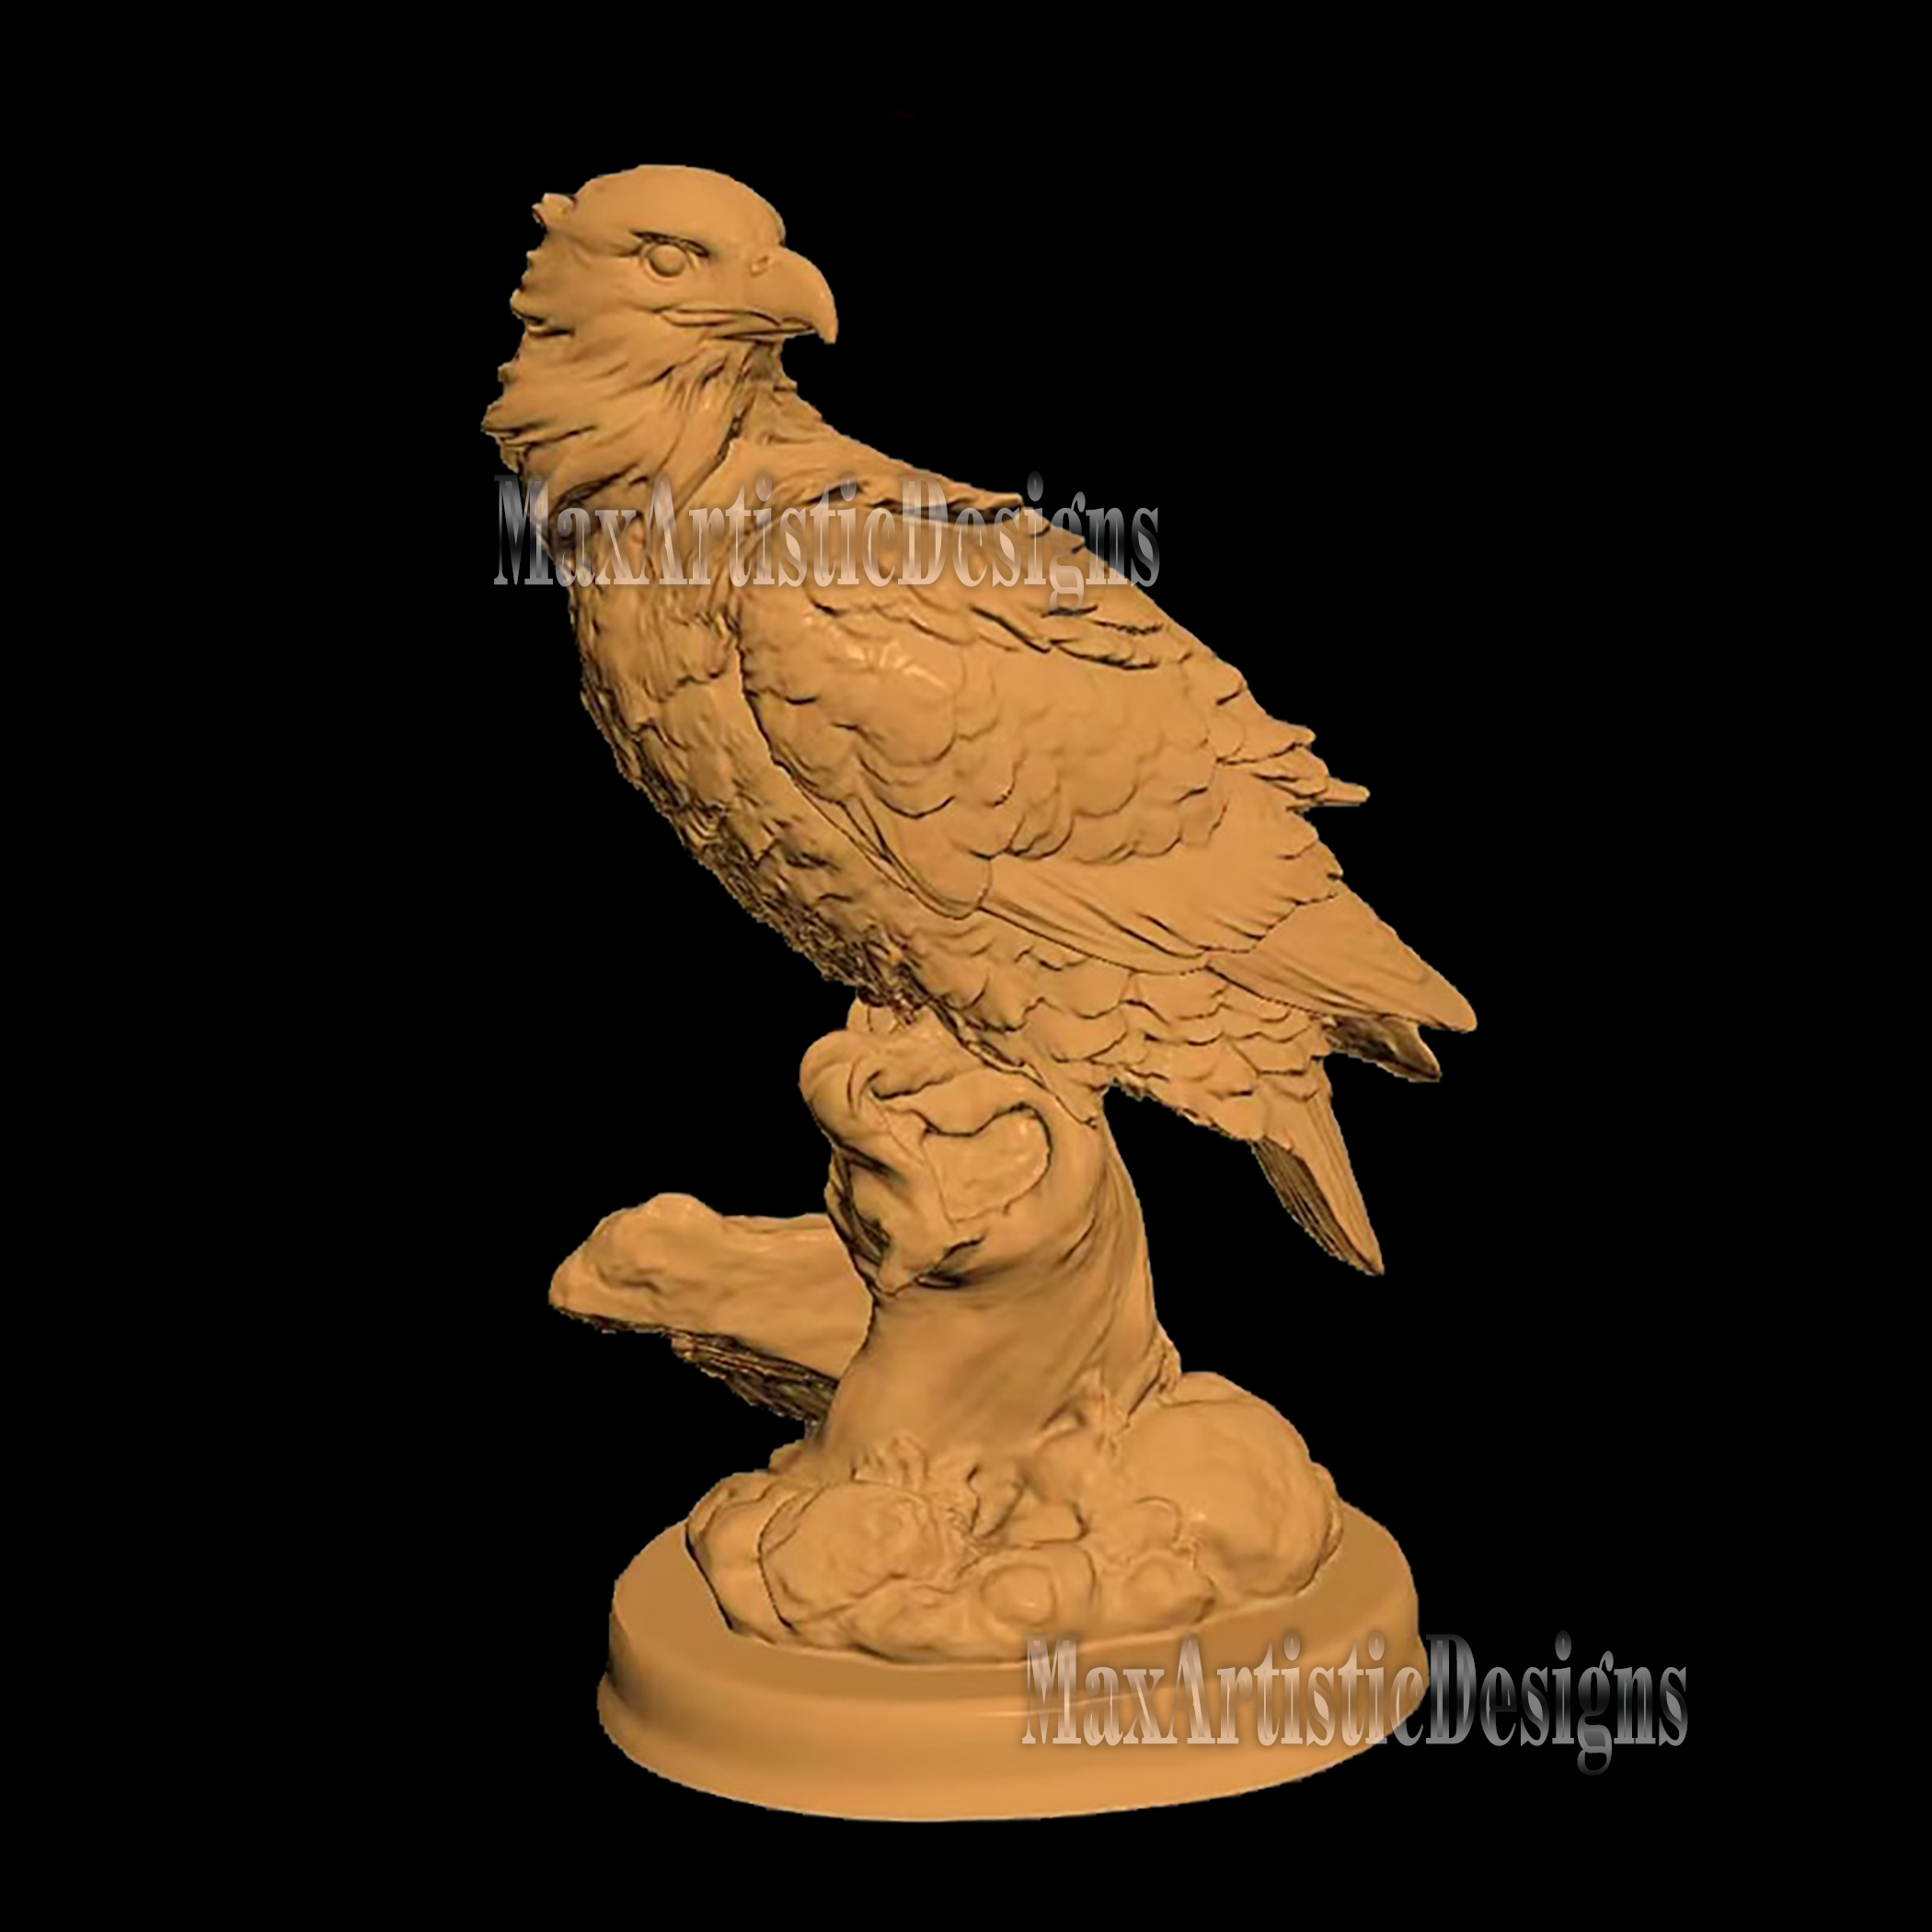 8+ 3d stl eagle eagles establecen modelos de relieve stl para enrutador cnc e impresora 3d en formato stl animal pack descarga digital